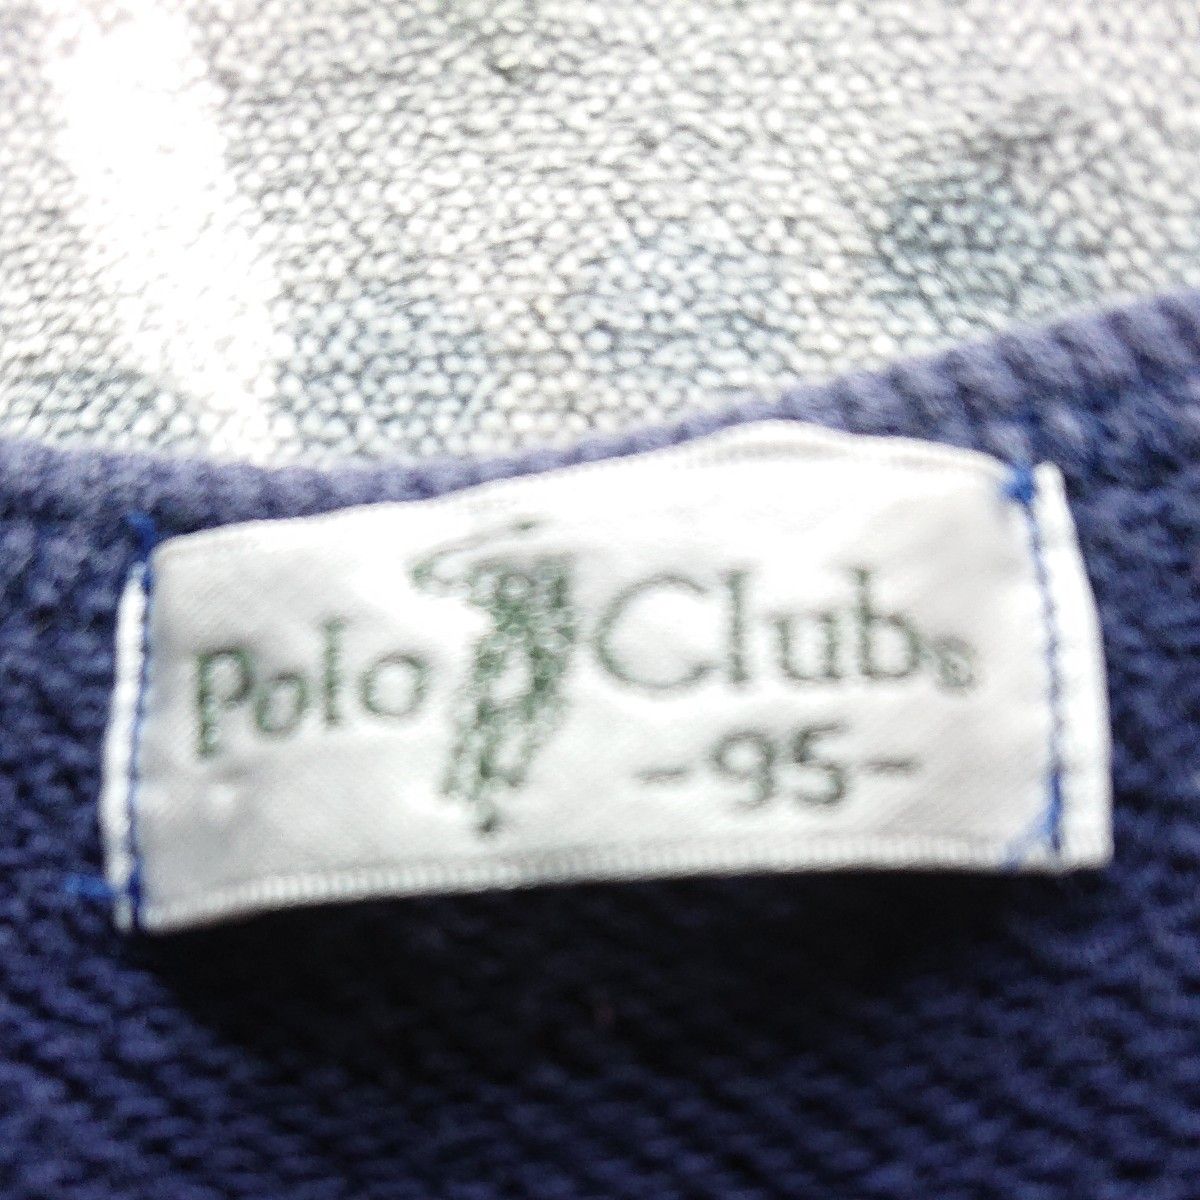 size 95 Poloclub ジャンパースカート